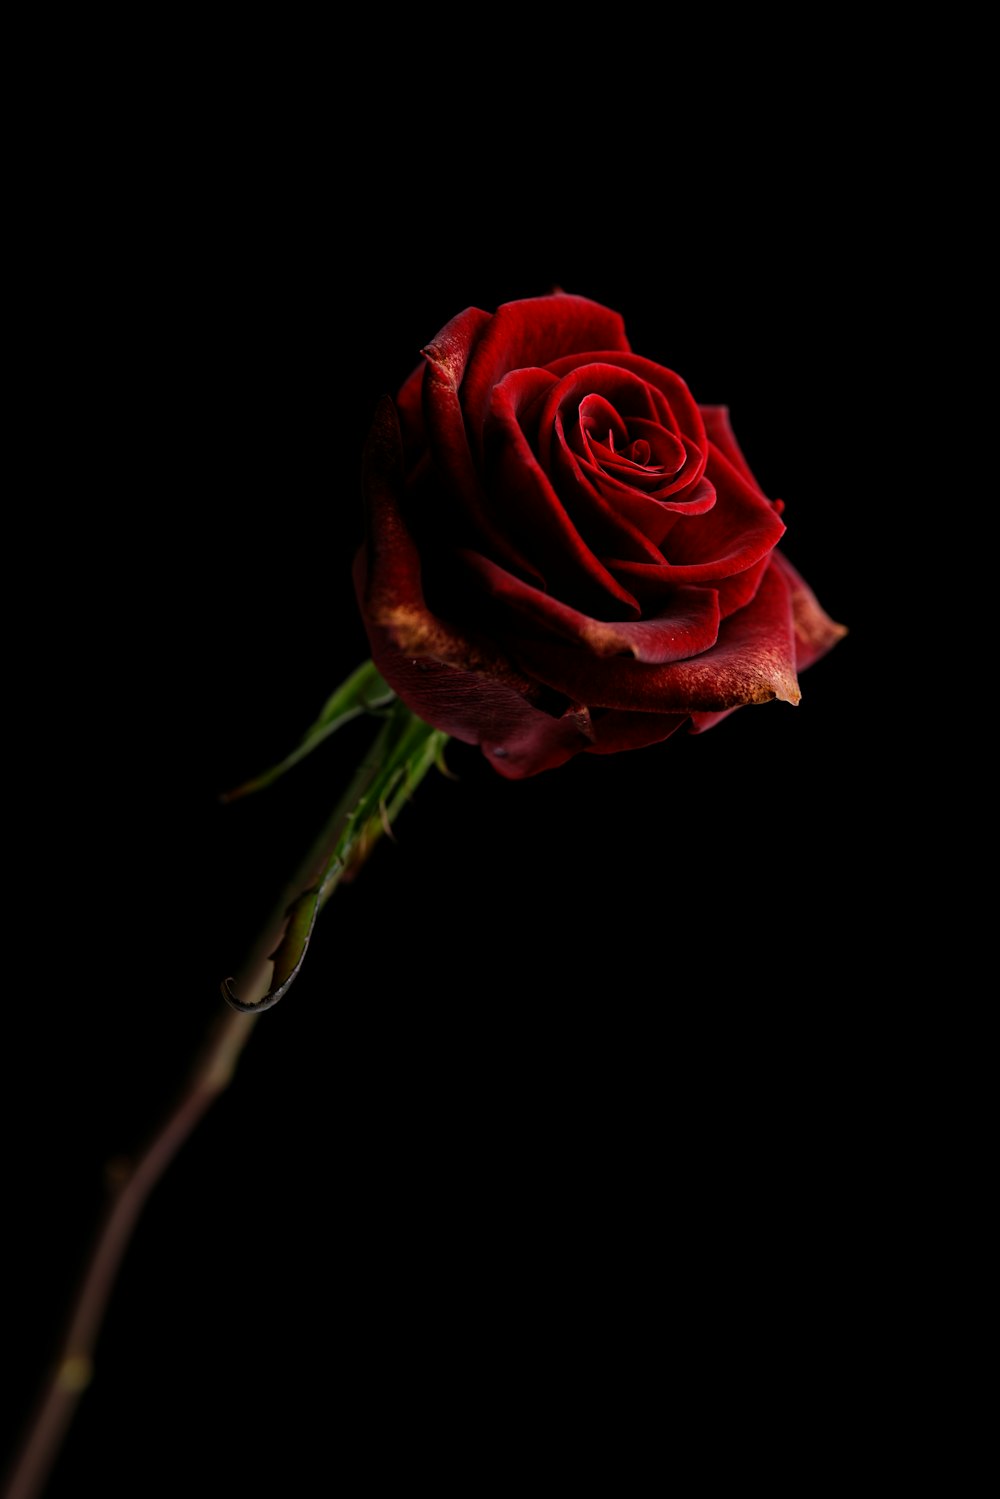 Red rose in black background photo – Free Dramatic Image on Unsplash